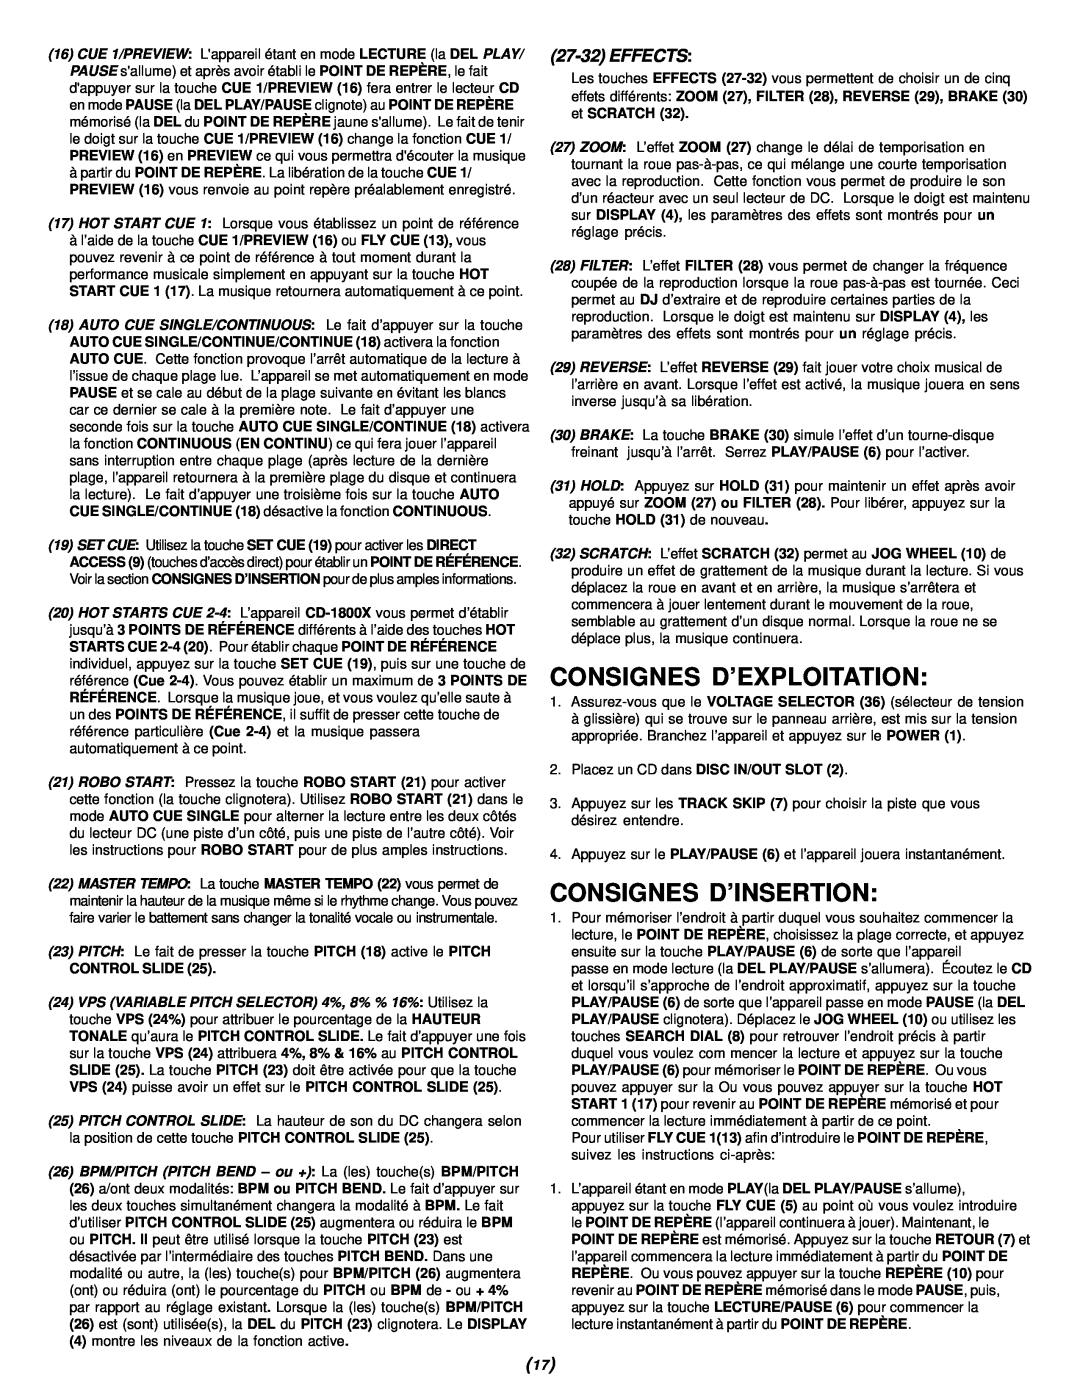 Gemini CD-1800X manual Consignes D’Exploitation, Consignes D’Insertion, 27-32EFFECTS, Control Slide 